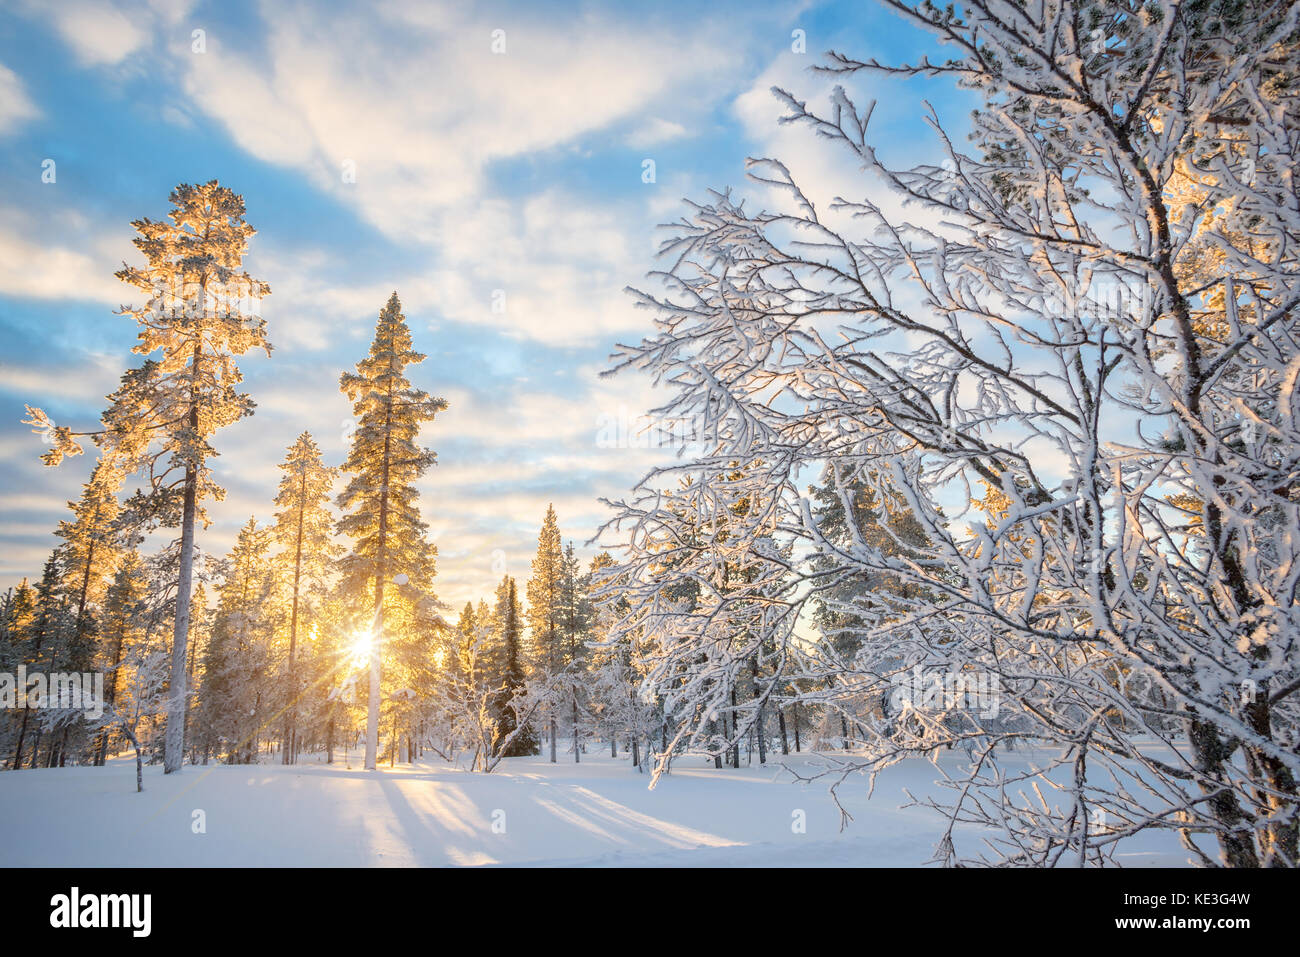 Snowy landscape at sunset, frozen trees in winter in Saariselka, Lapland, Finland Stock Photo